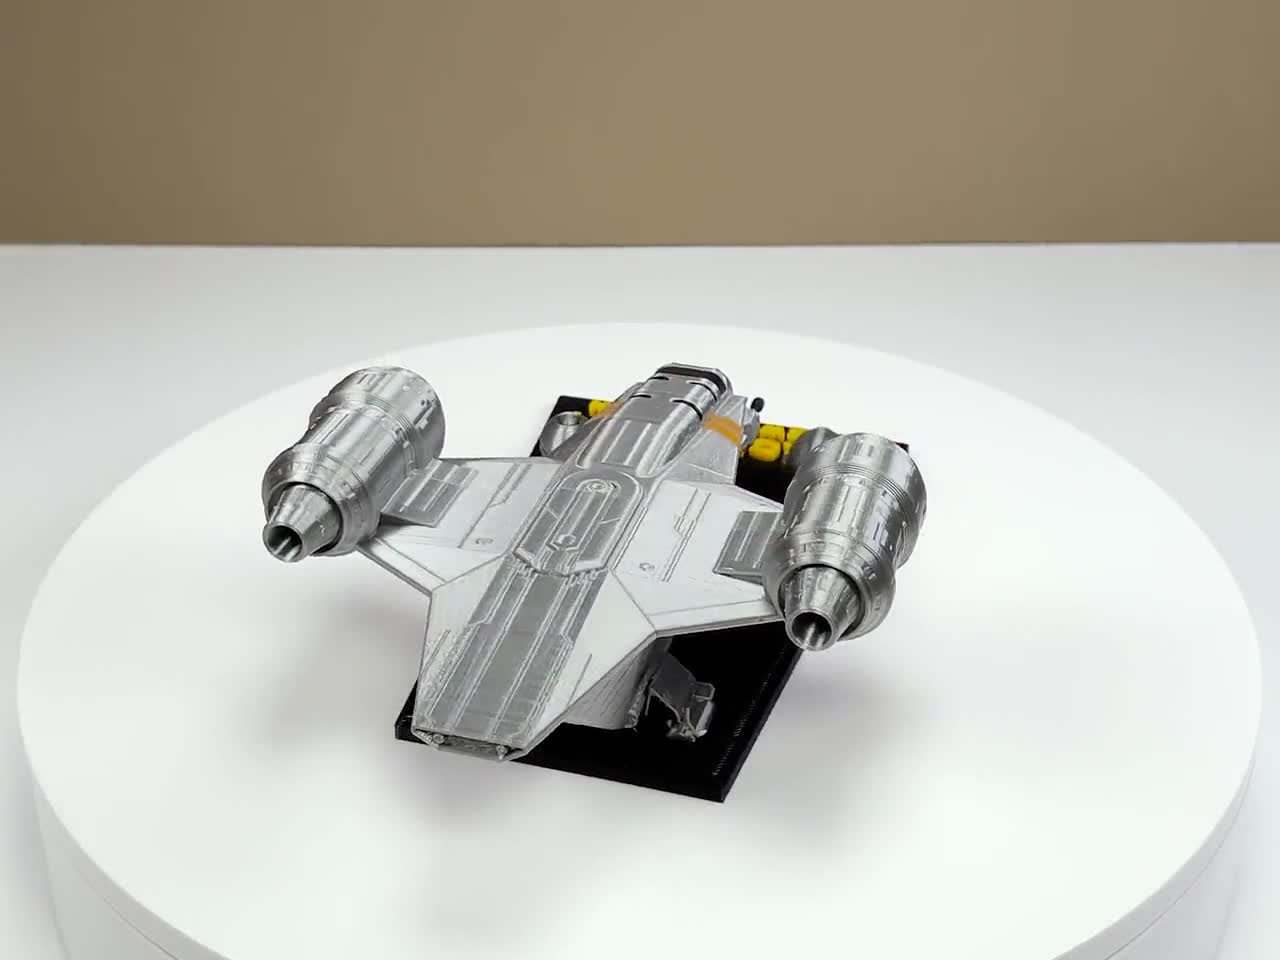 Razor Crest Spaceship from The Mandalorian | Razor Crest | Mandalorian |  Plastic Model | Spacecraft | 3D Print